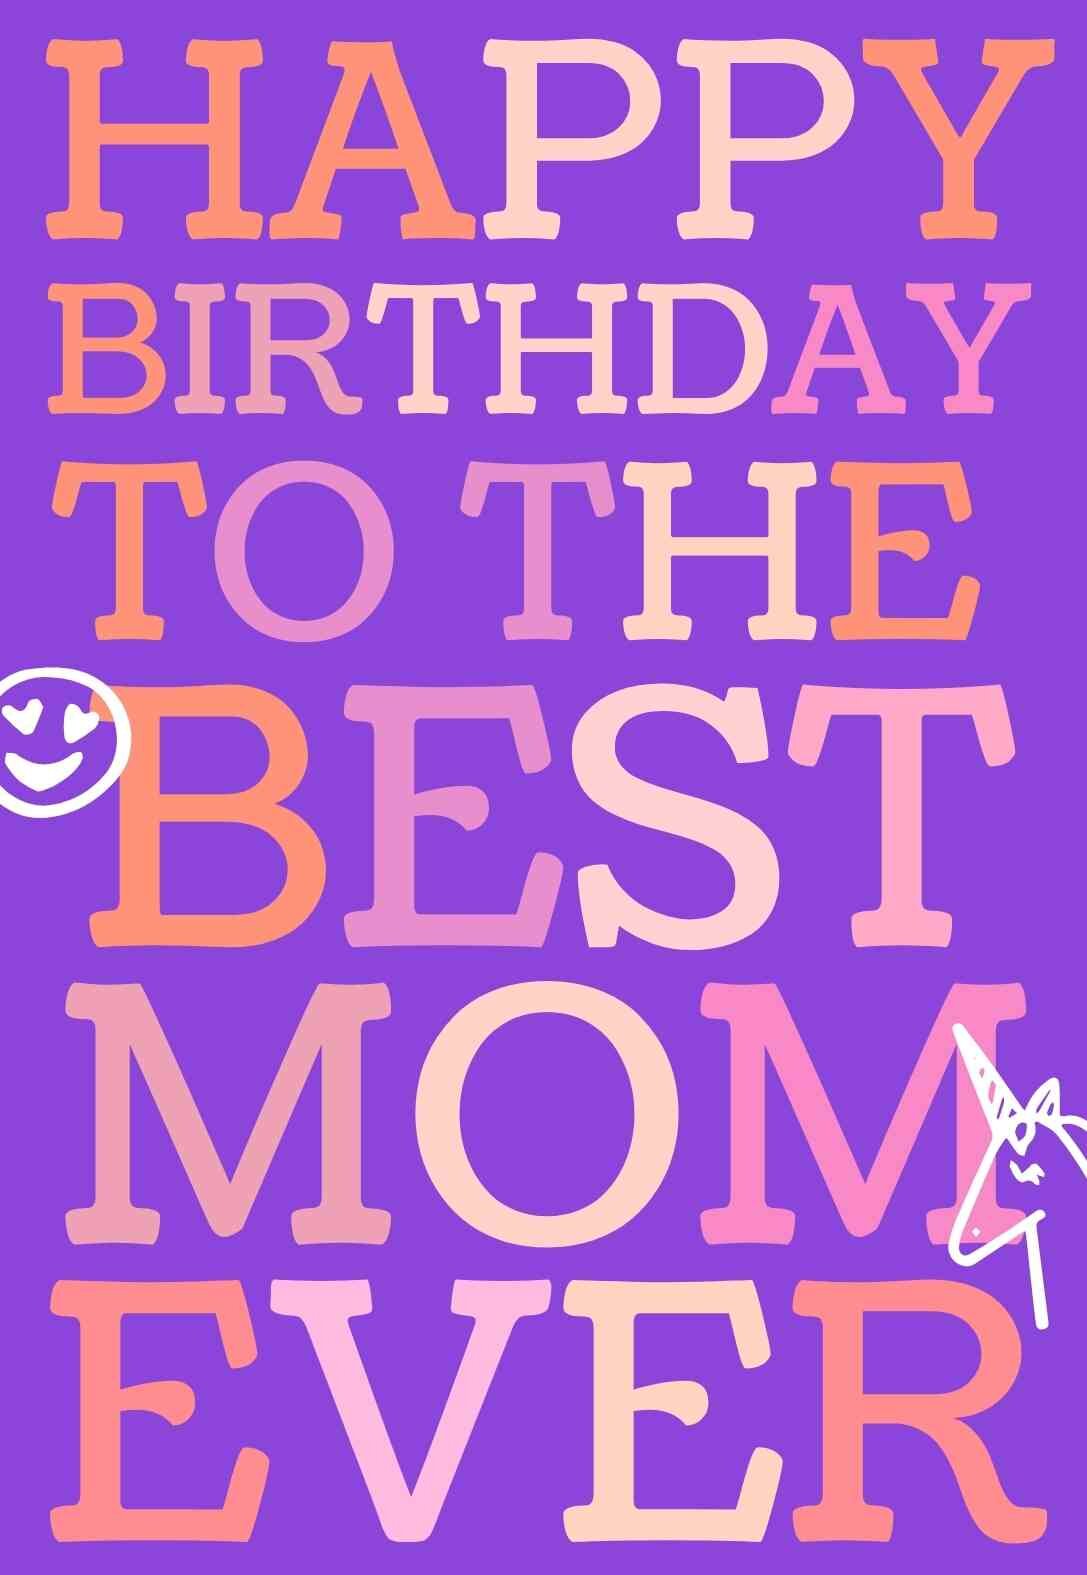 28 Awsome Printable Birthday Cards for Mom (free) — PRINTBIRTHDAY.CARDS